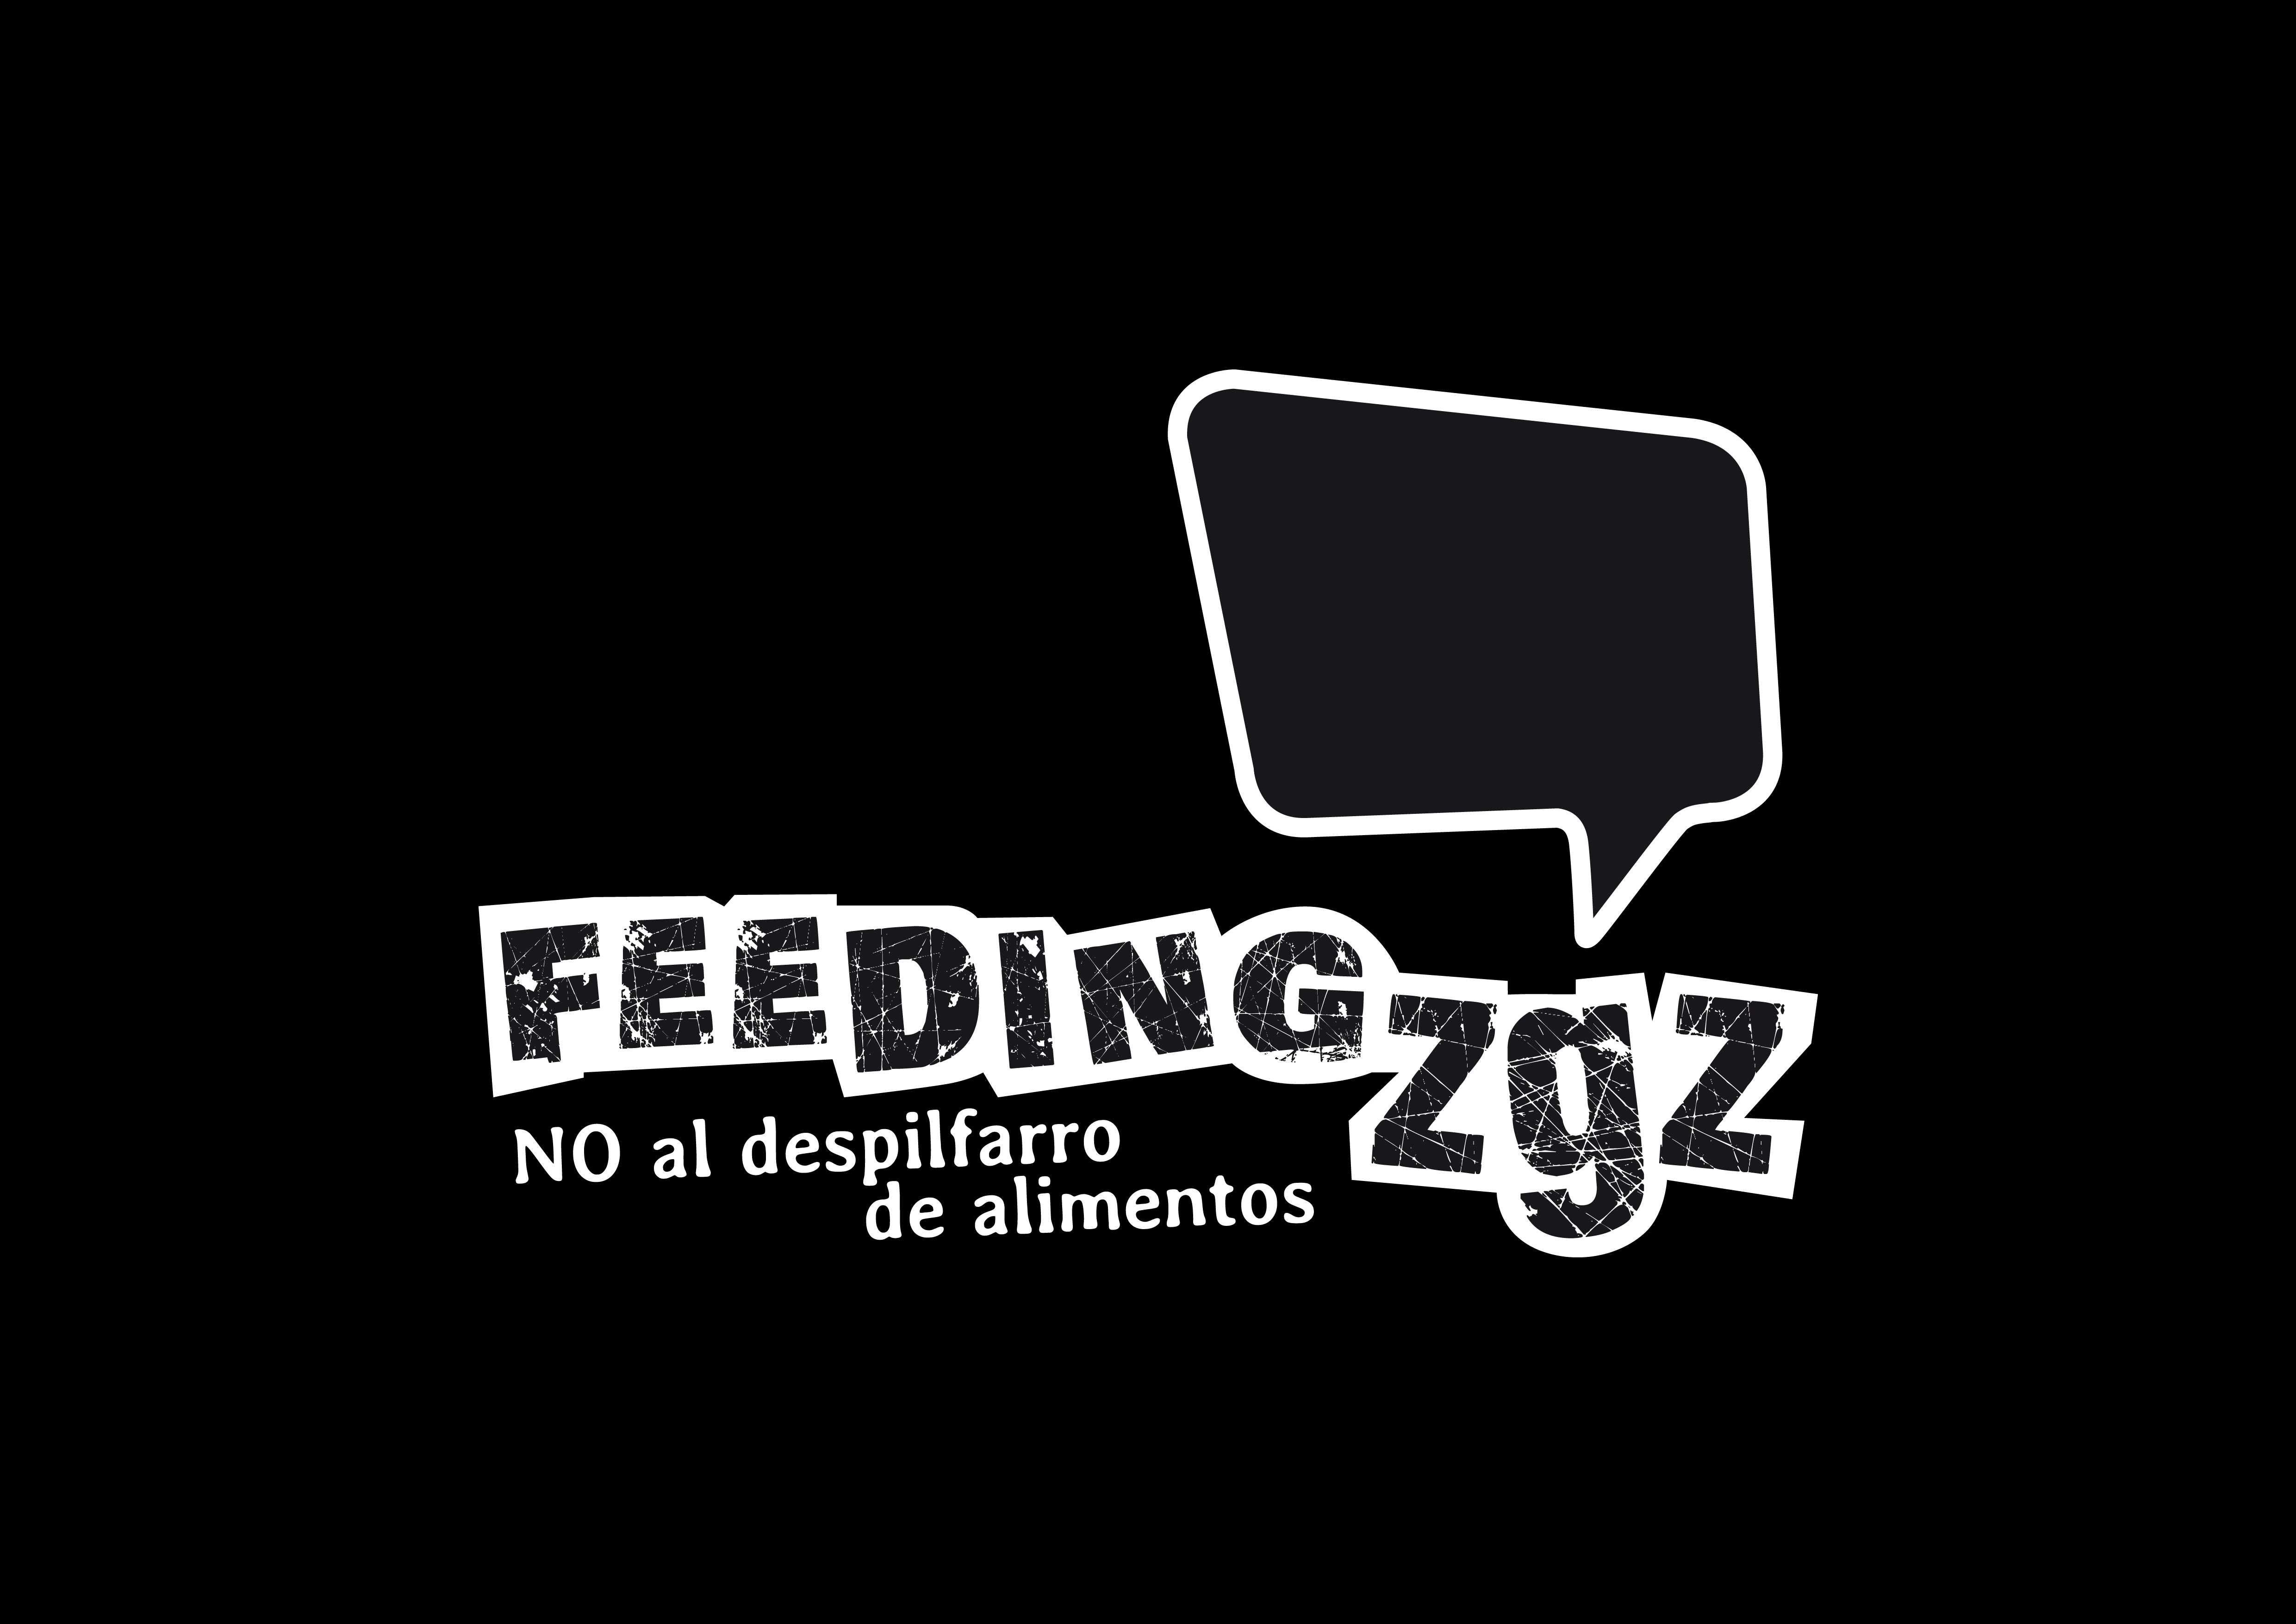 Feeding Zgz